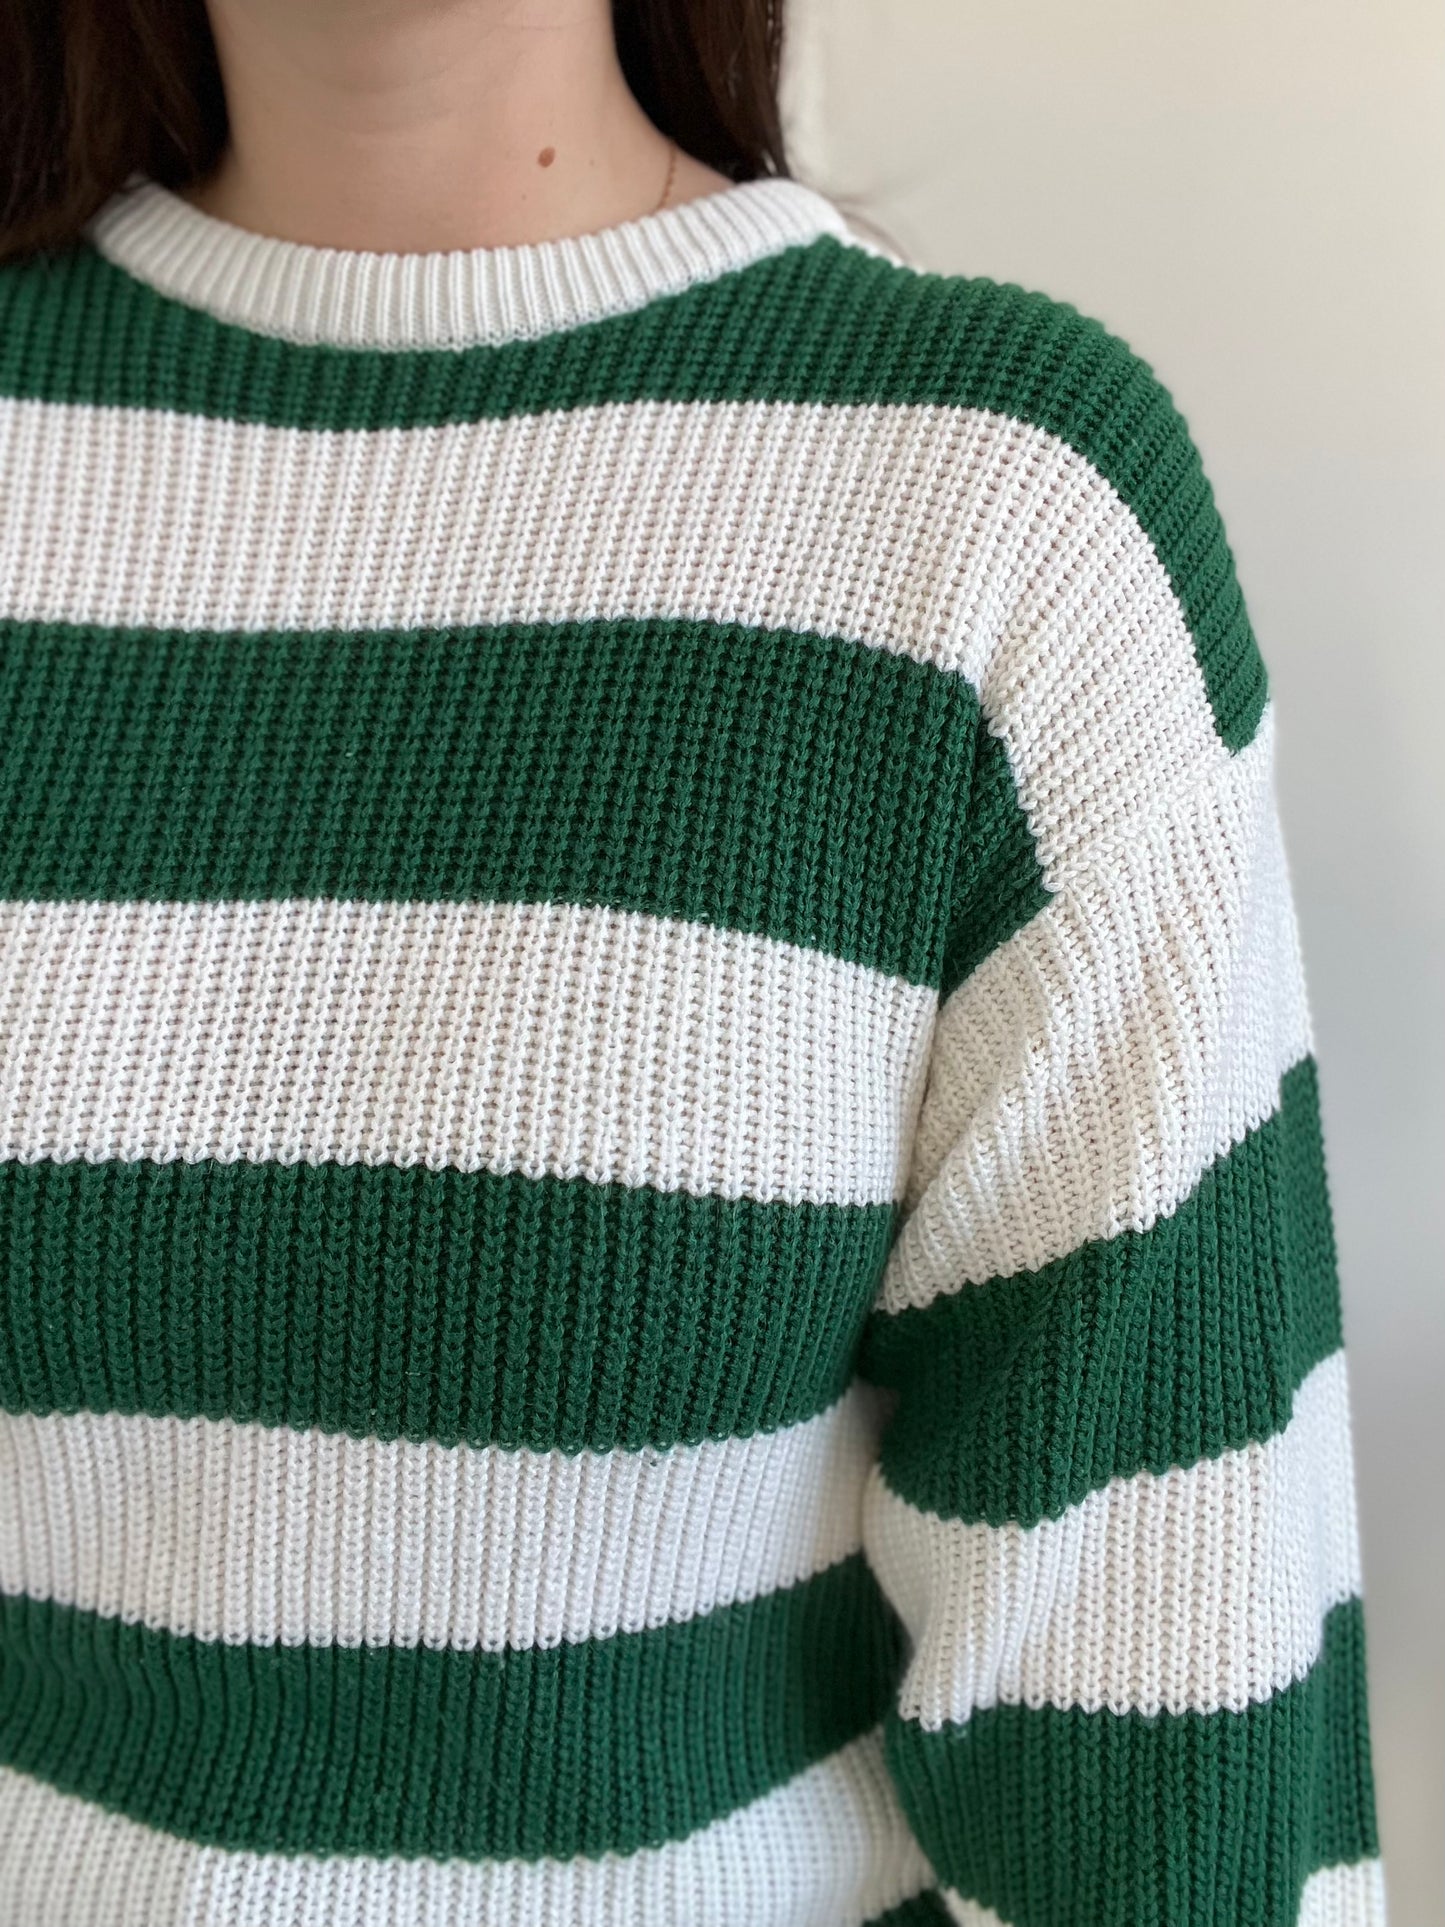 Green & White Striped Sweater - M